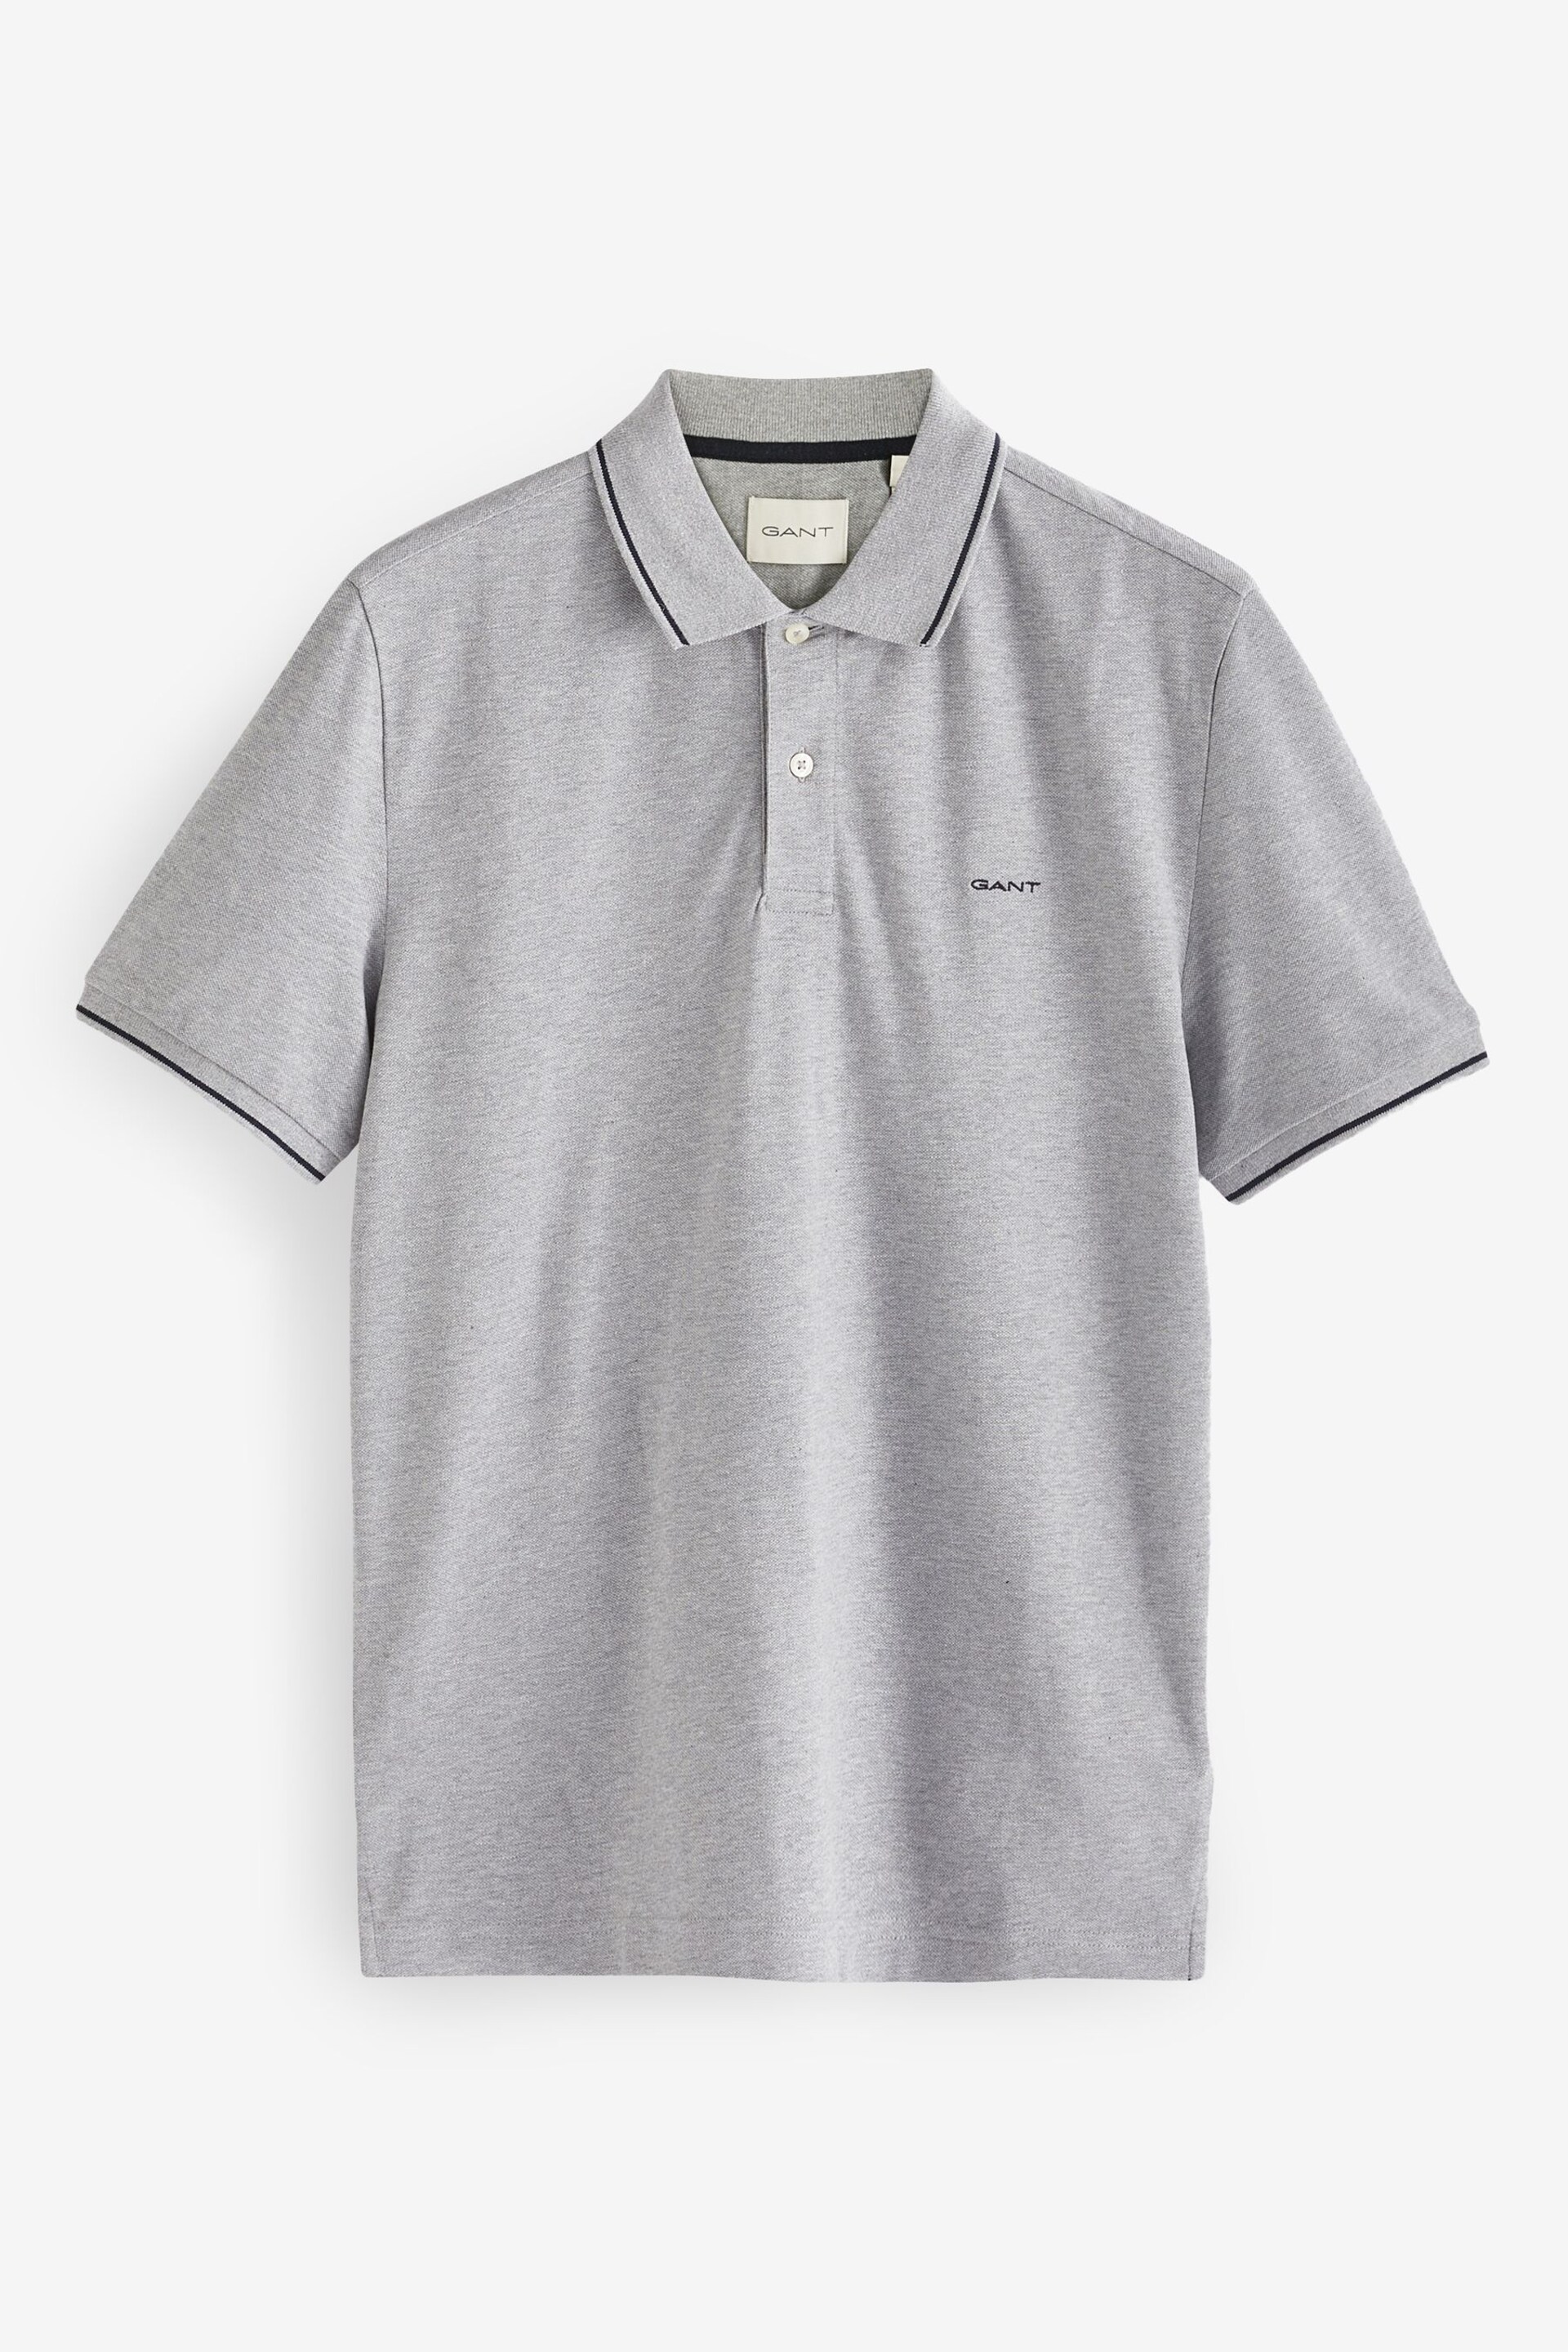 GANT Tipped Piqué Polo Shirt - Image 5 of 5